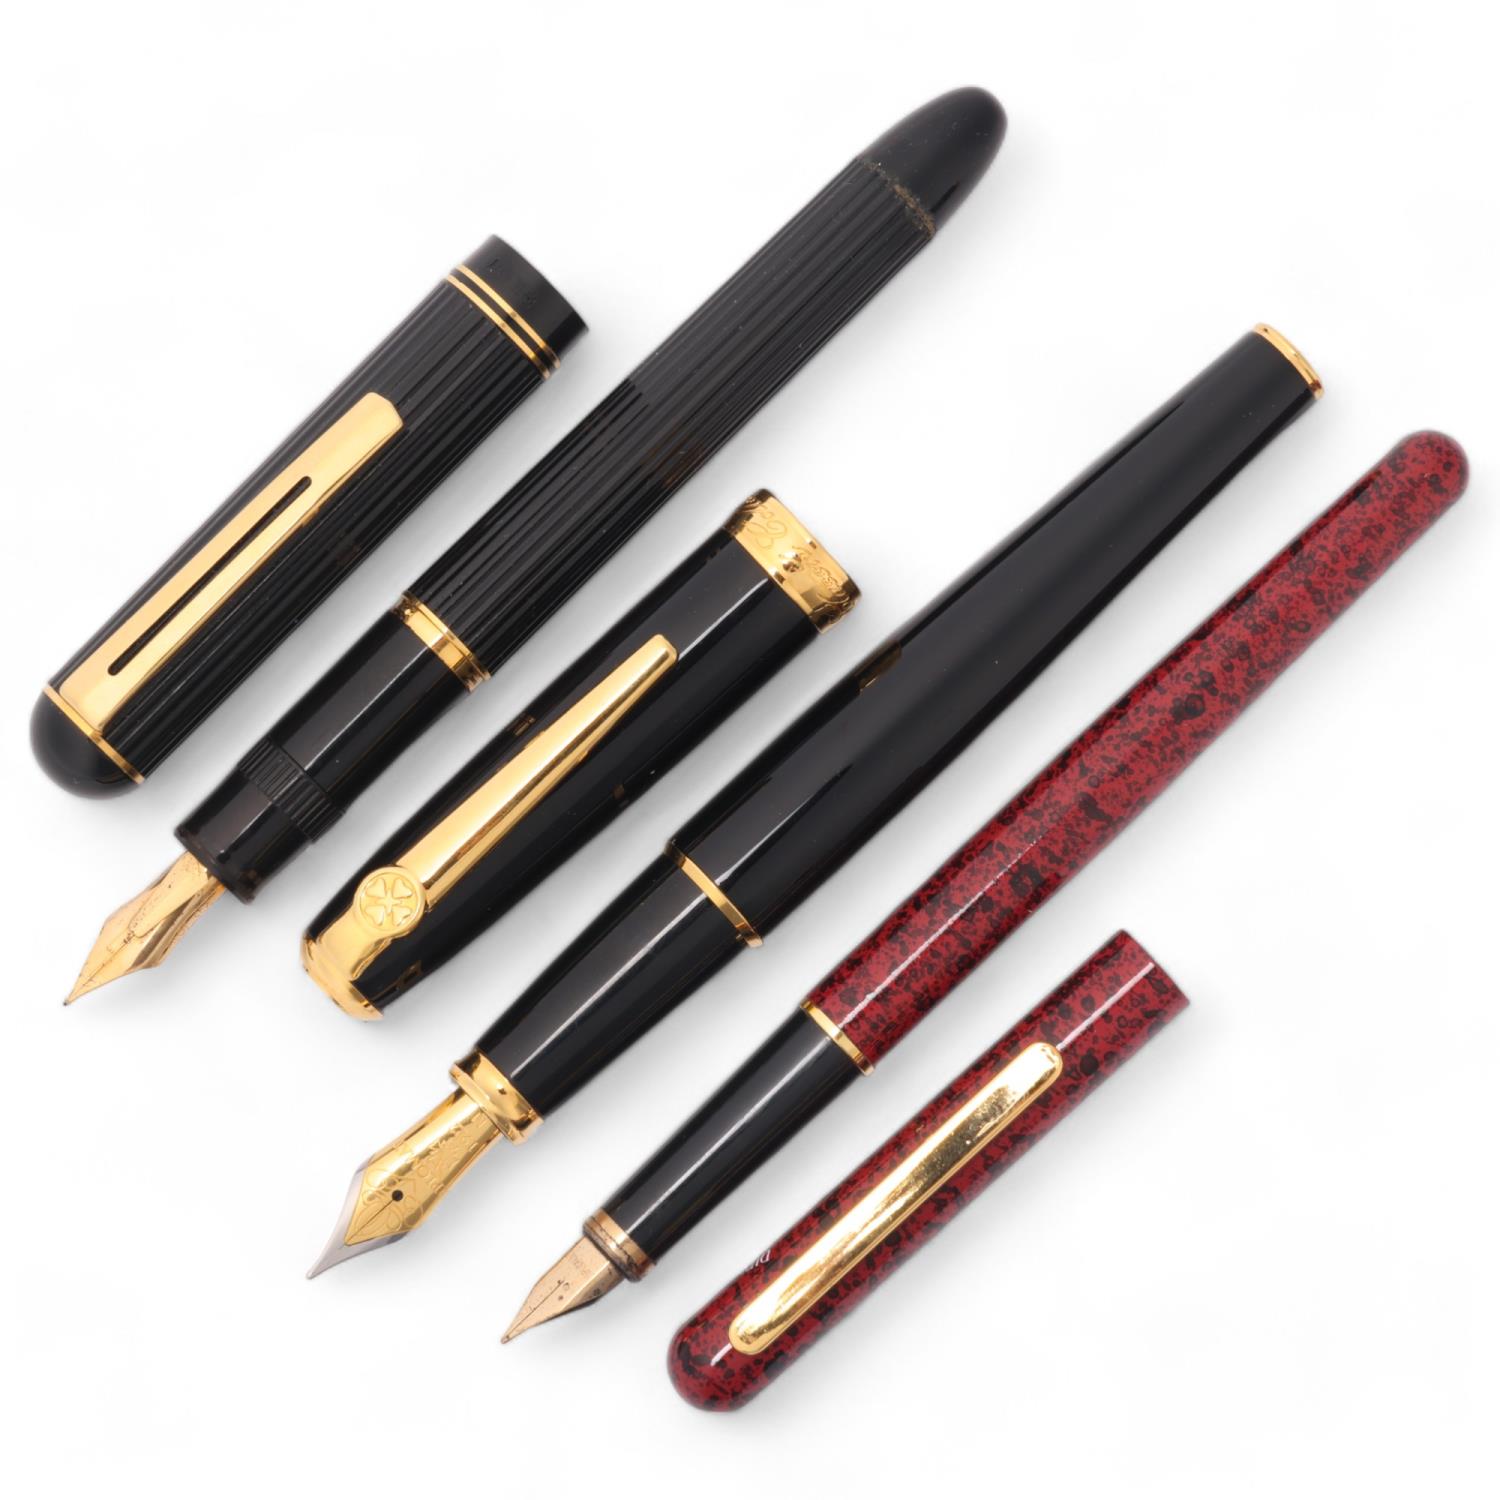 3 late 20th century fountain pens, a Pilot ridged black pen with 14ct F nib, A black Diplomat